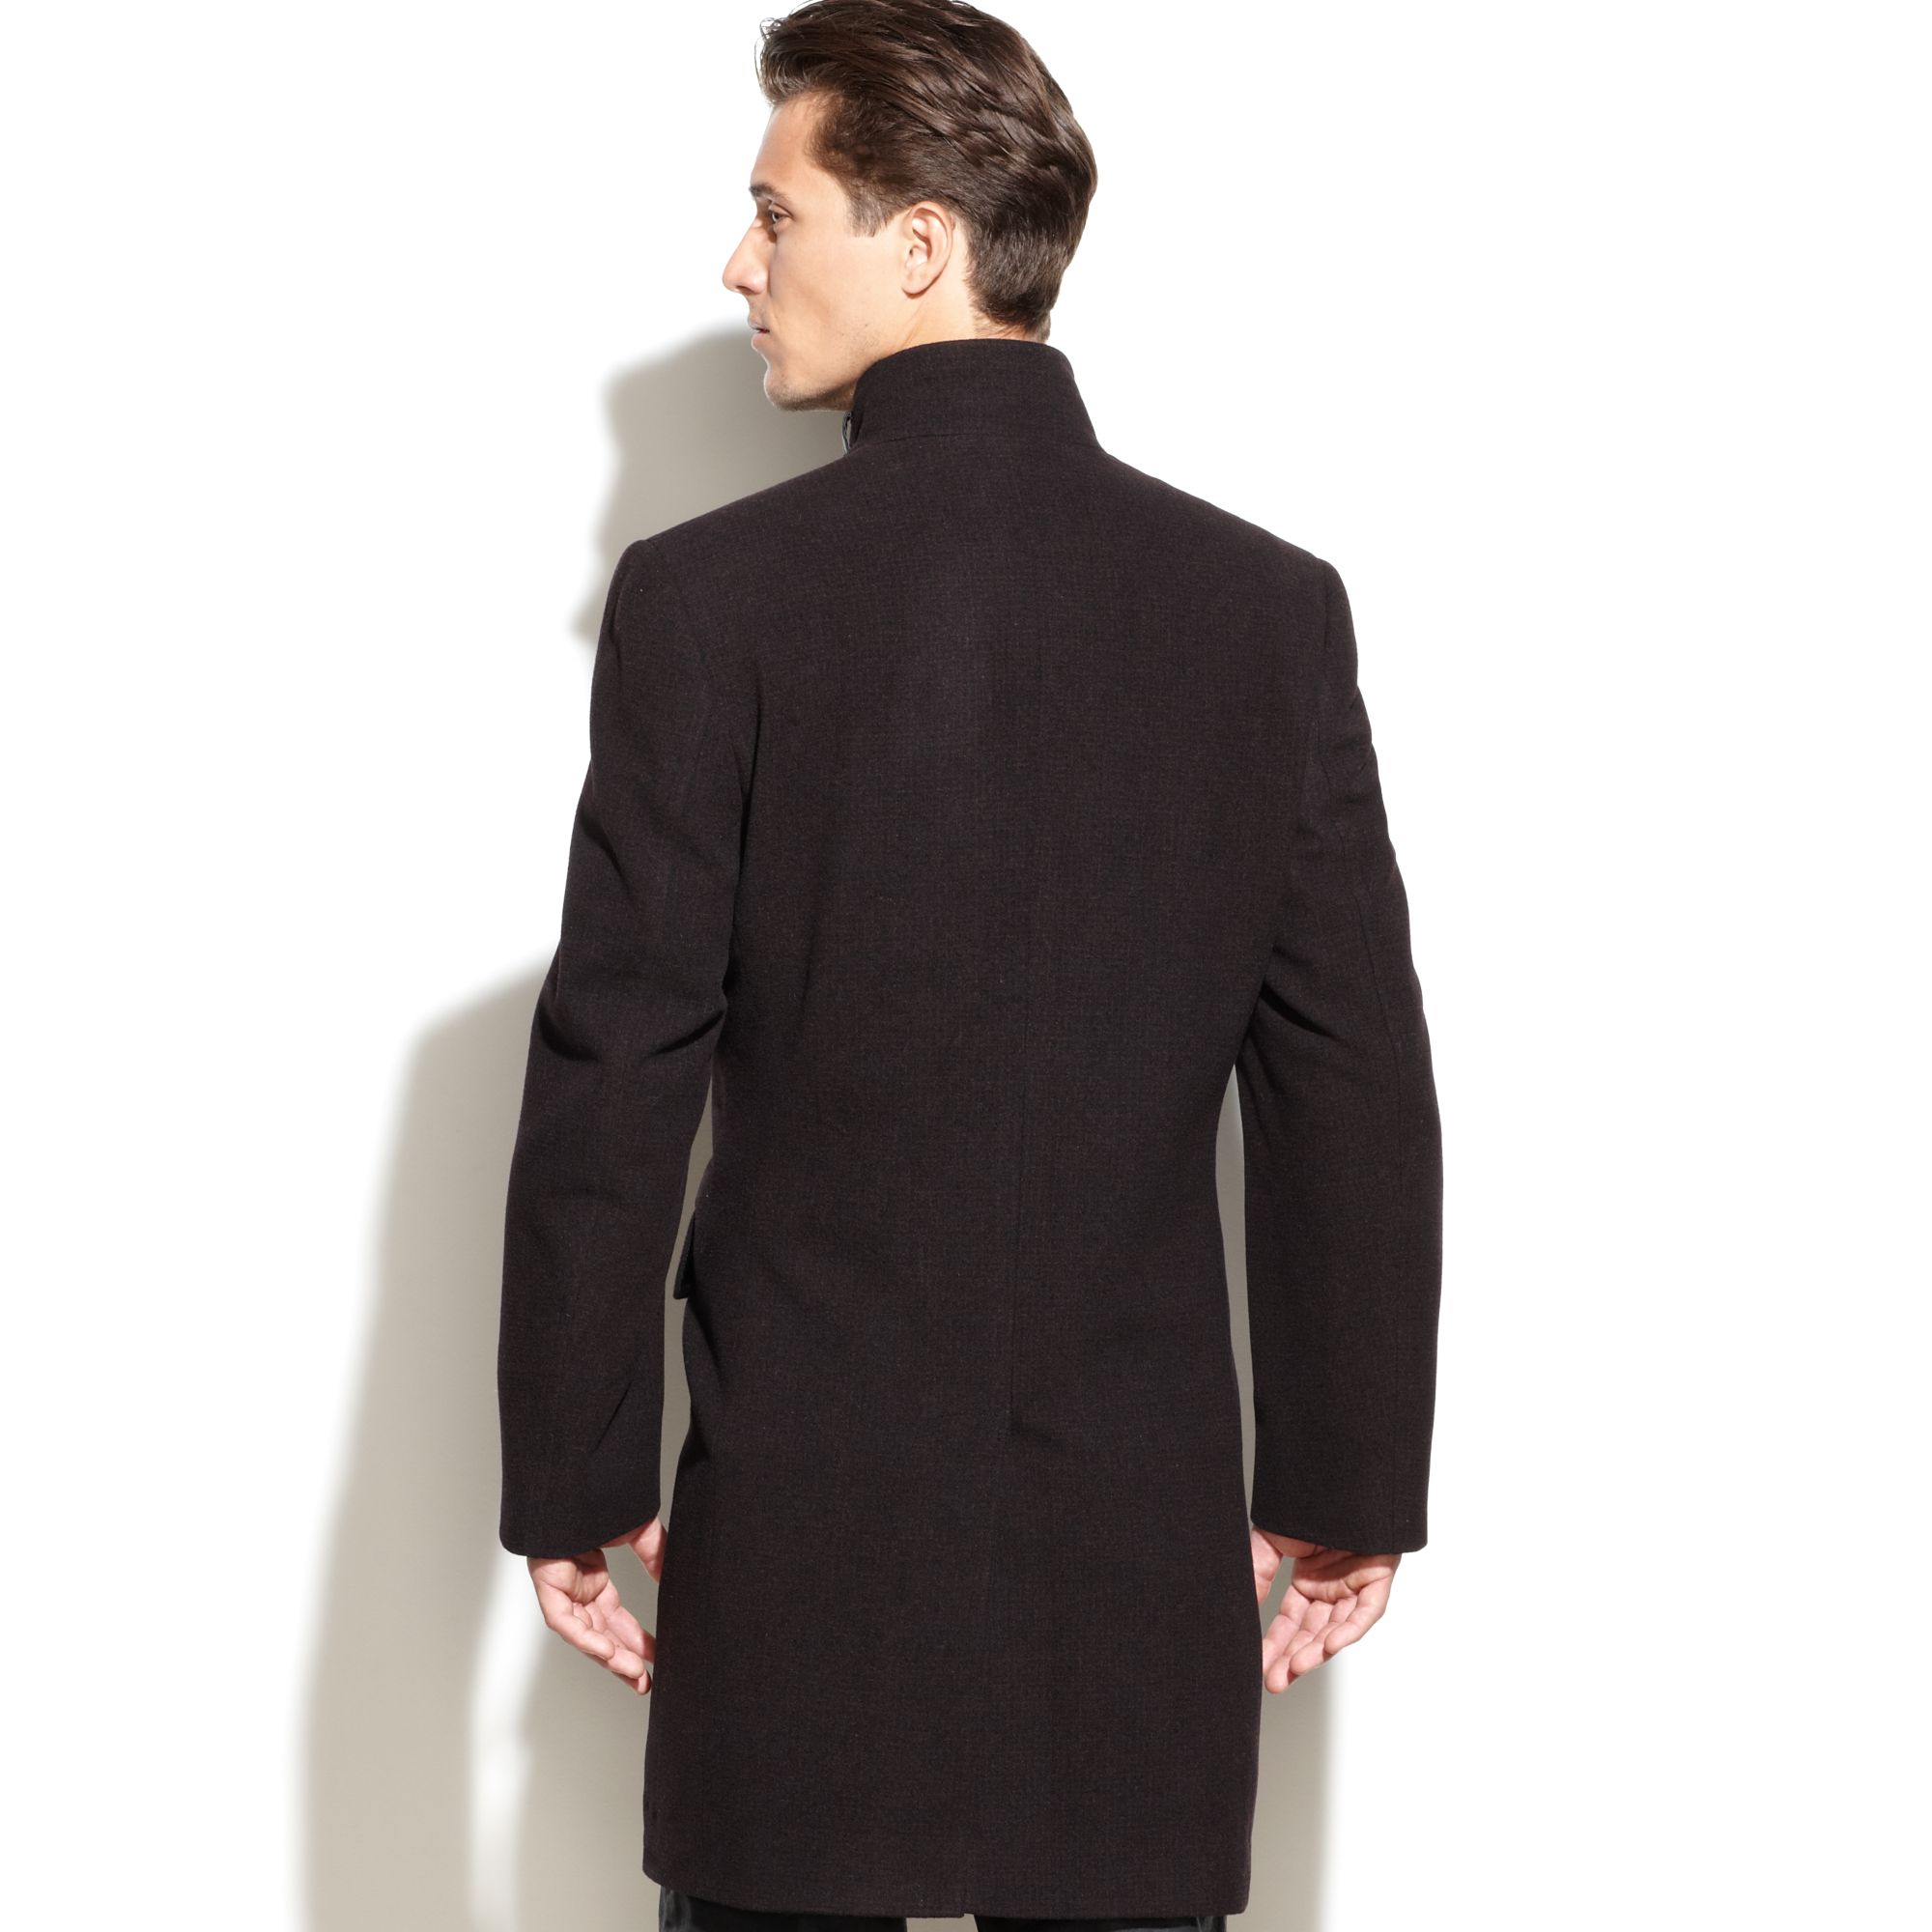 Lyst - Calvin Klein Merlow Doublebreasted Check Woolblend Overcoat in ...